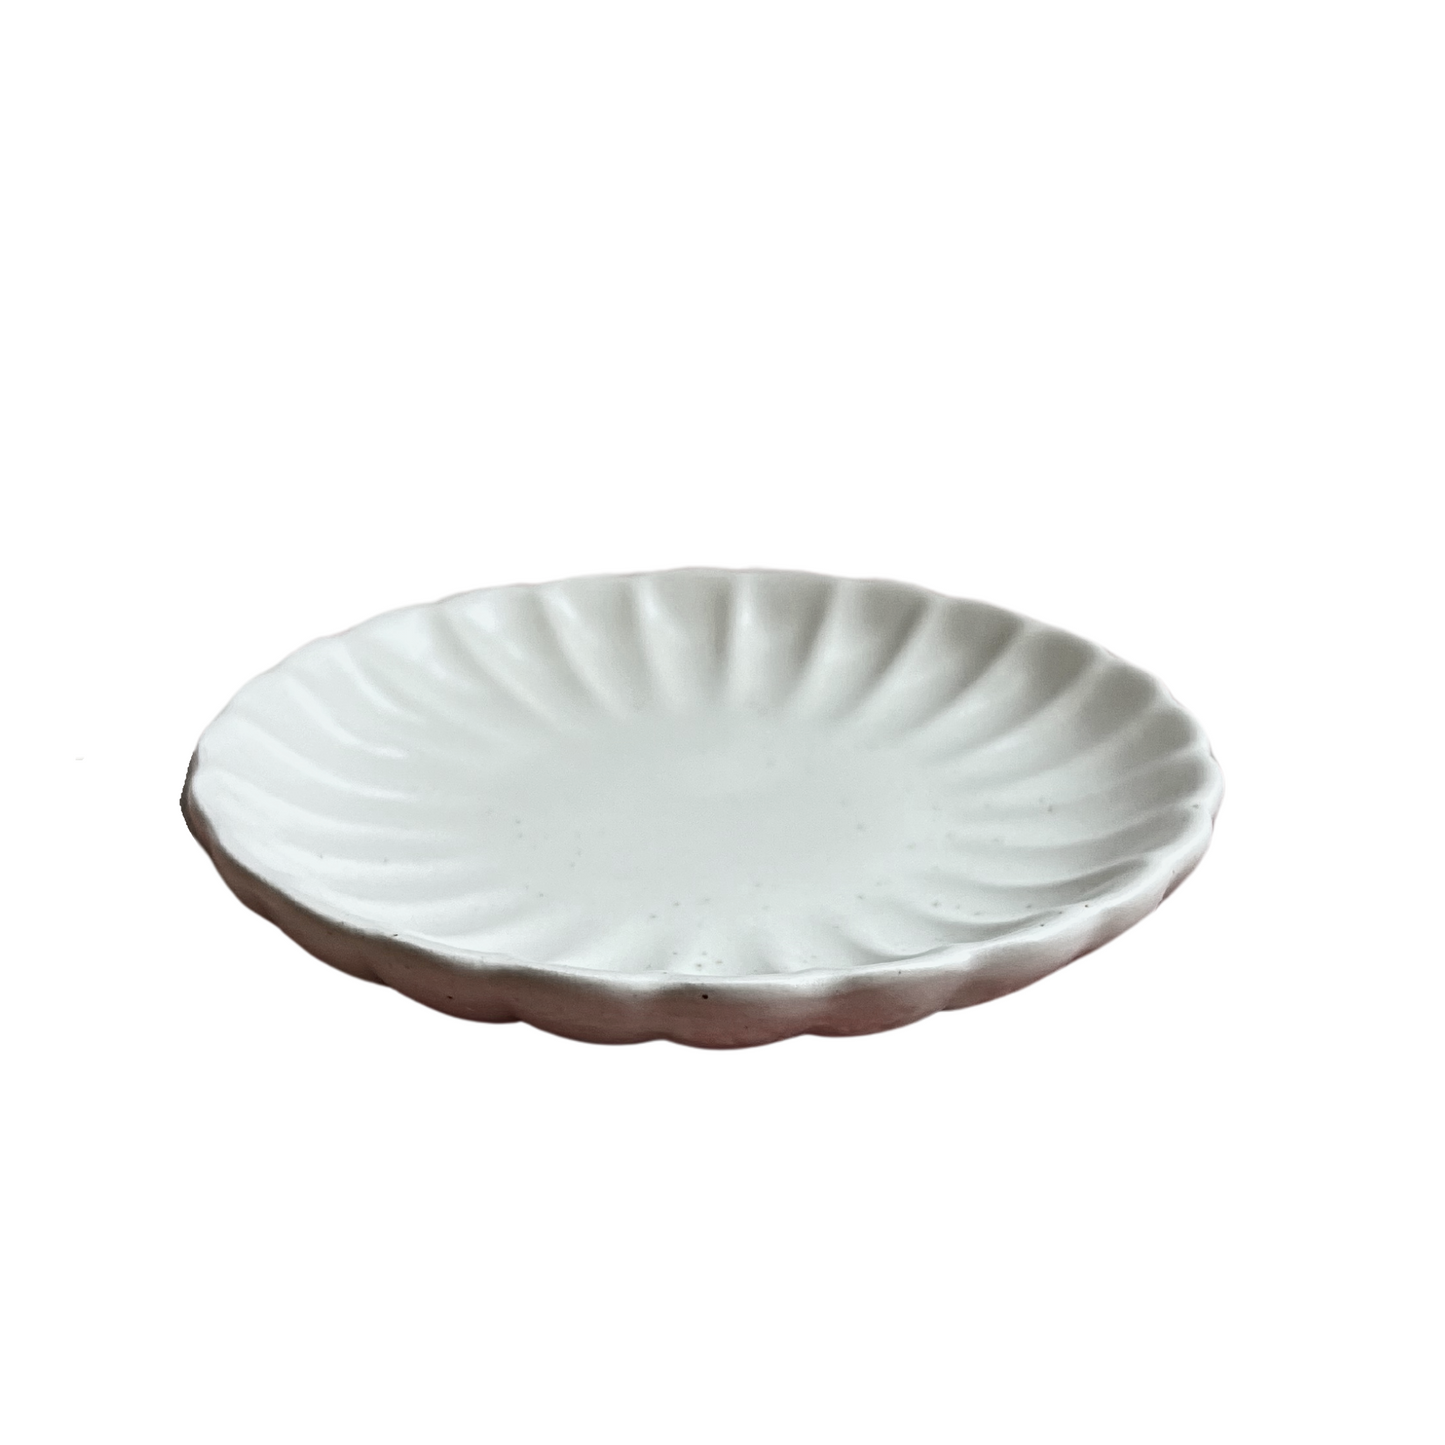 Toothpowder Ceramic Dish Patterned Cream